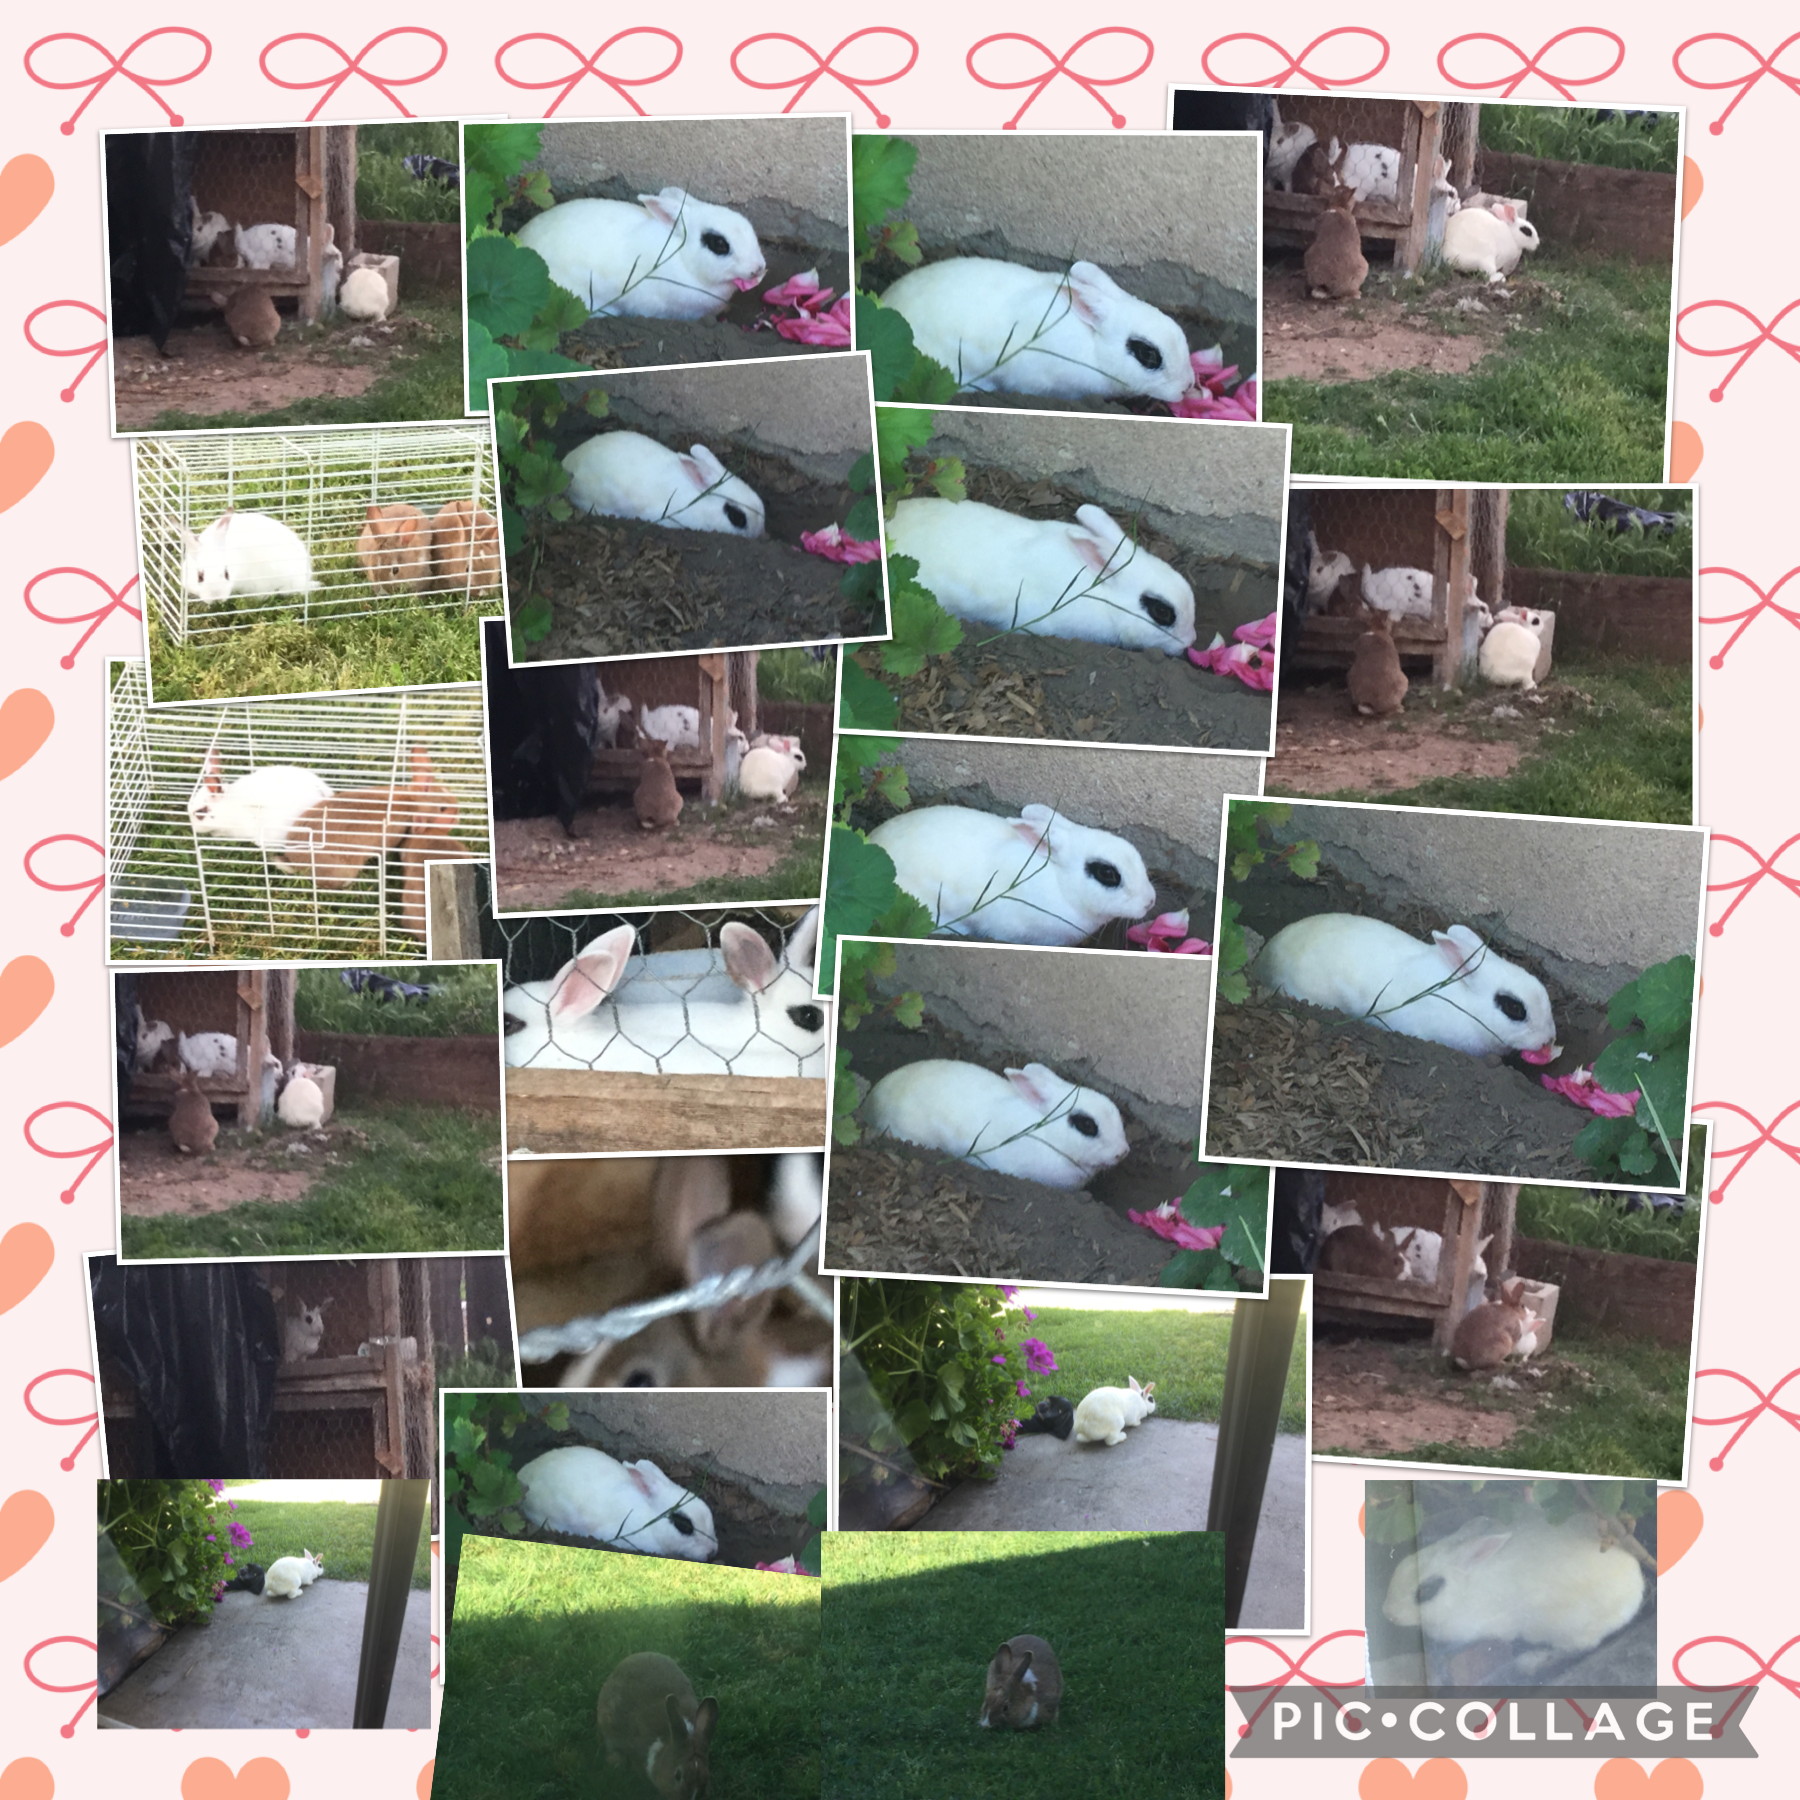 Lots of bunny’s!